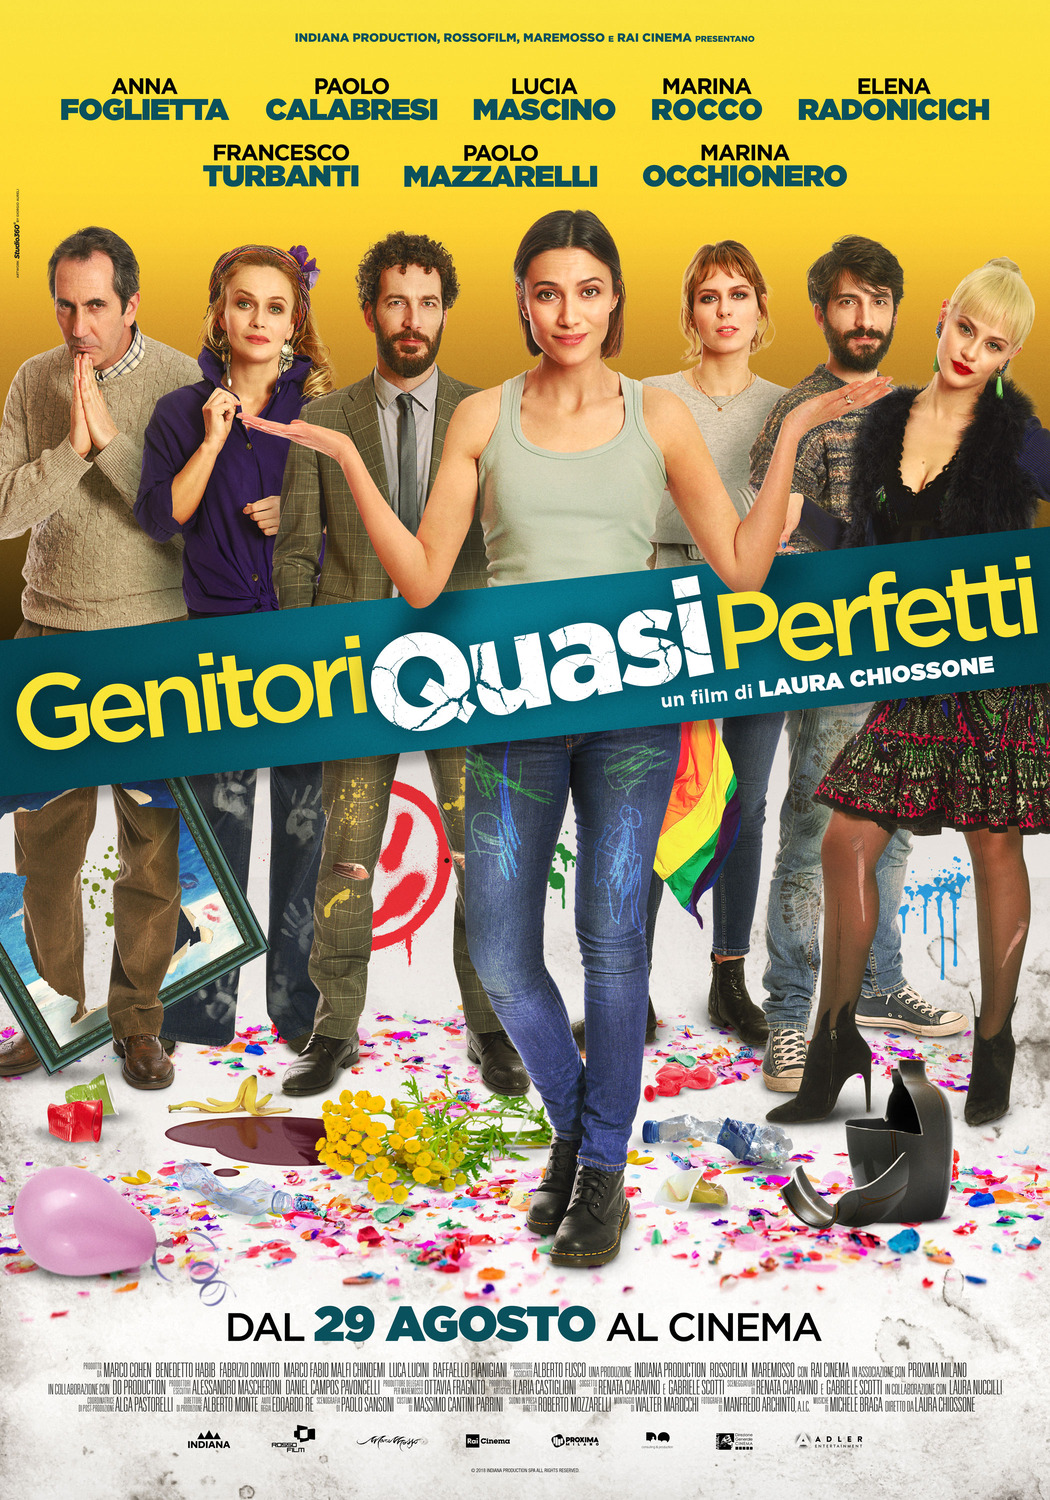 Extra Large Movie Poster Image for Genitori quasi perfetti 